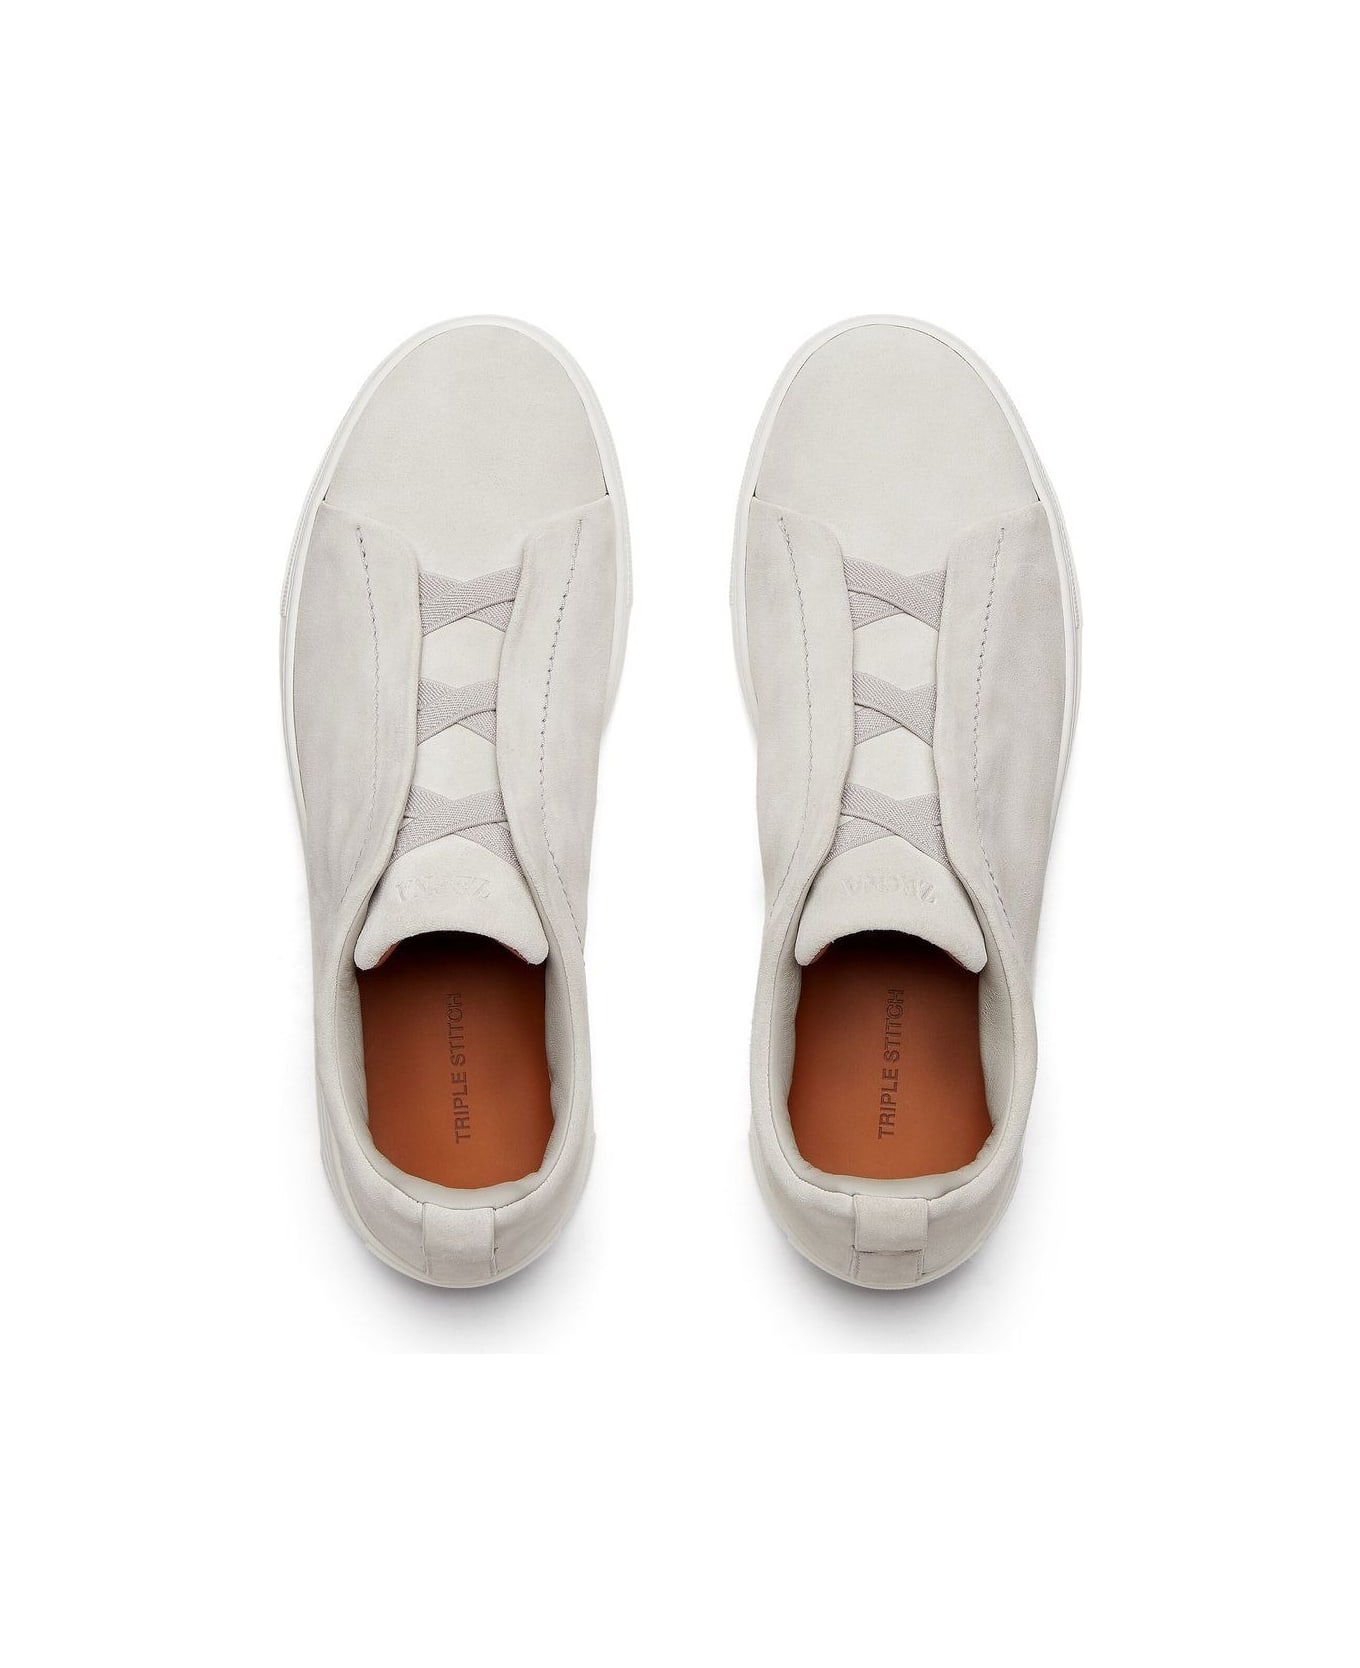 Zegna Triple Stitch Sneakers In White Suede - White